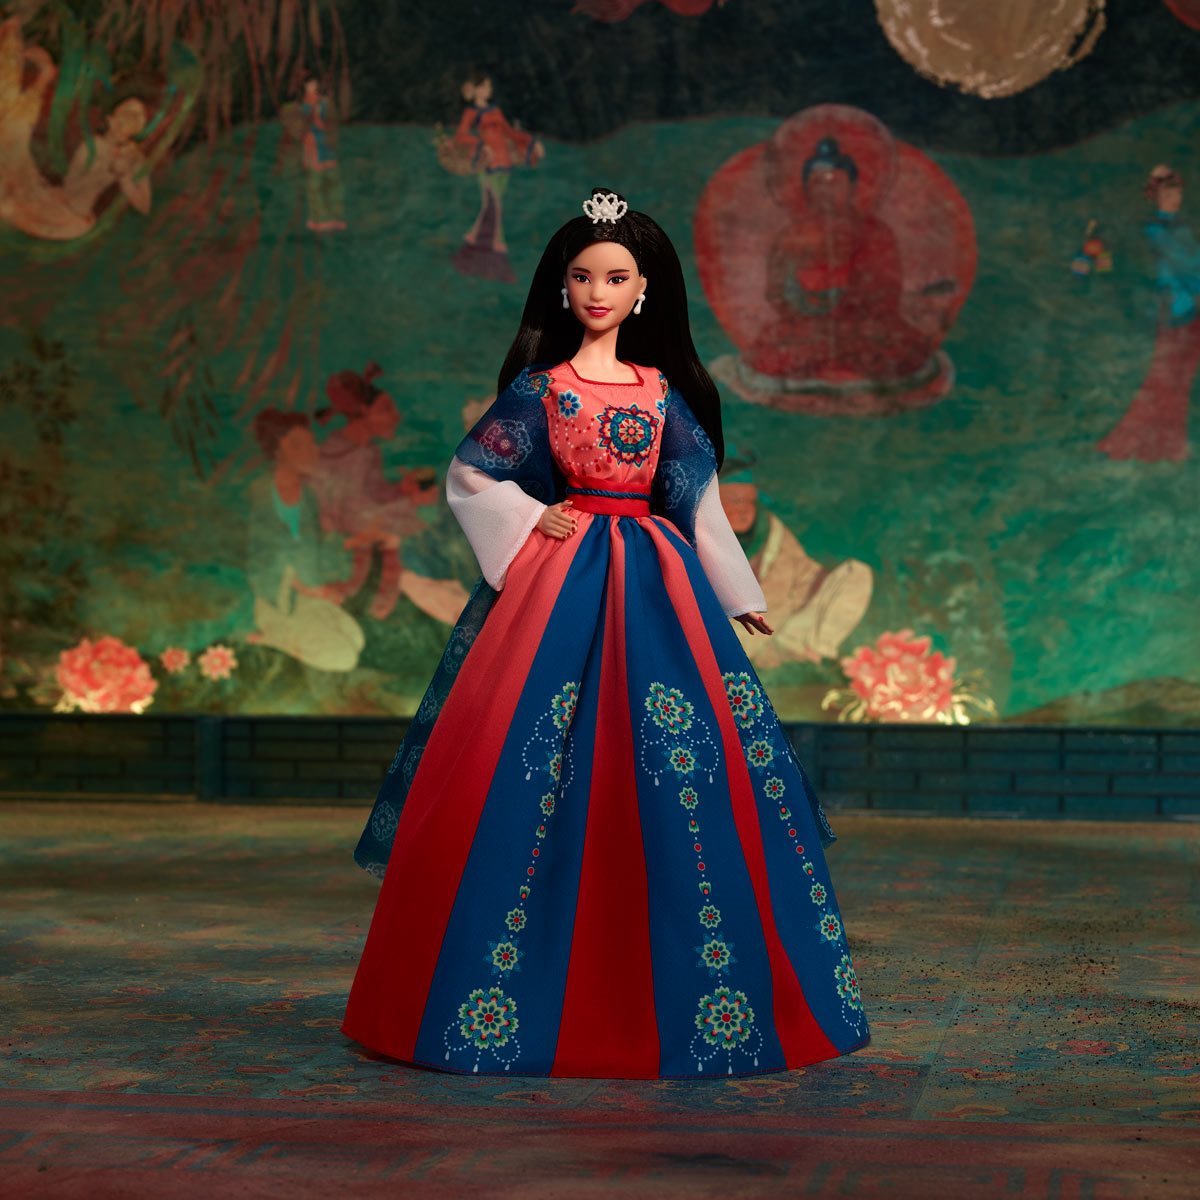 Knop Pidgin Viool Barbie Lunar New Year Doll - Entertainment Earth